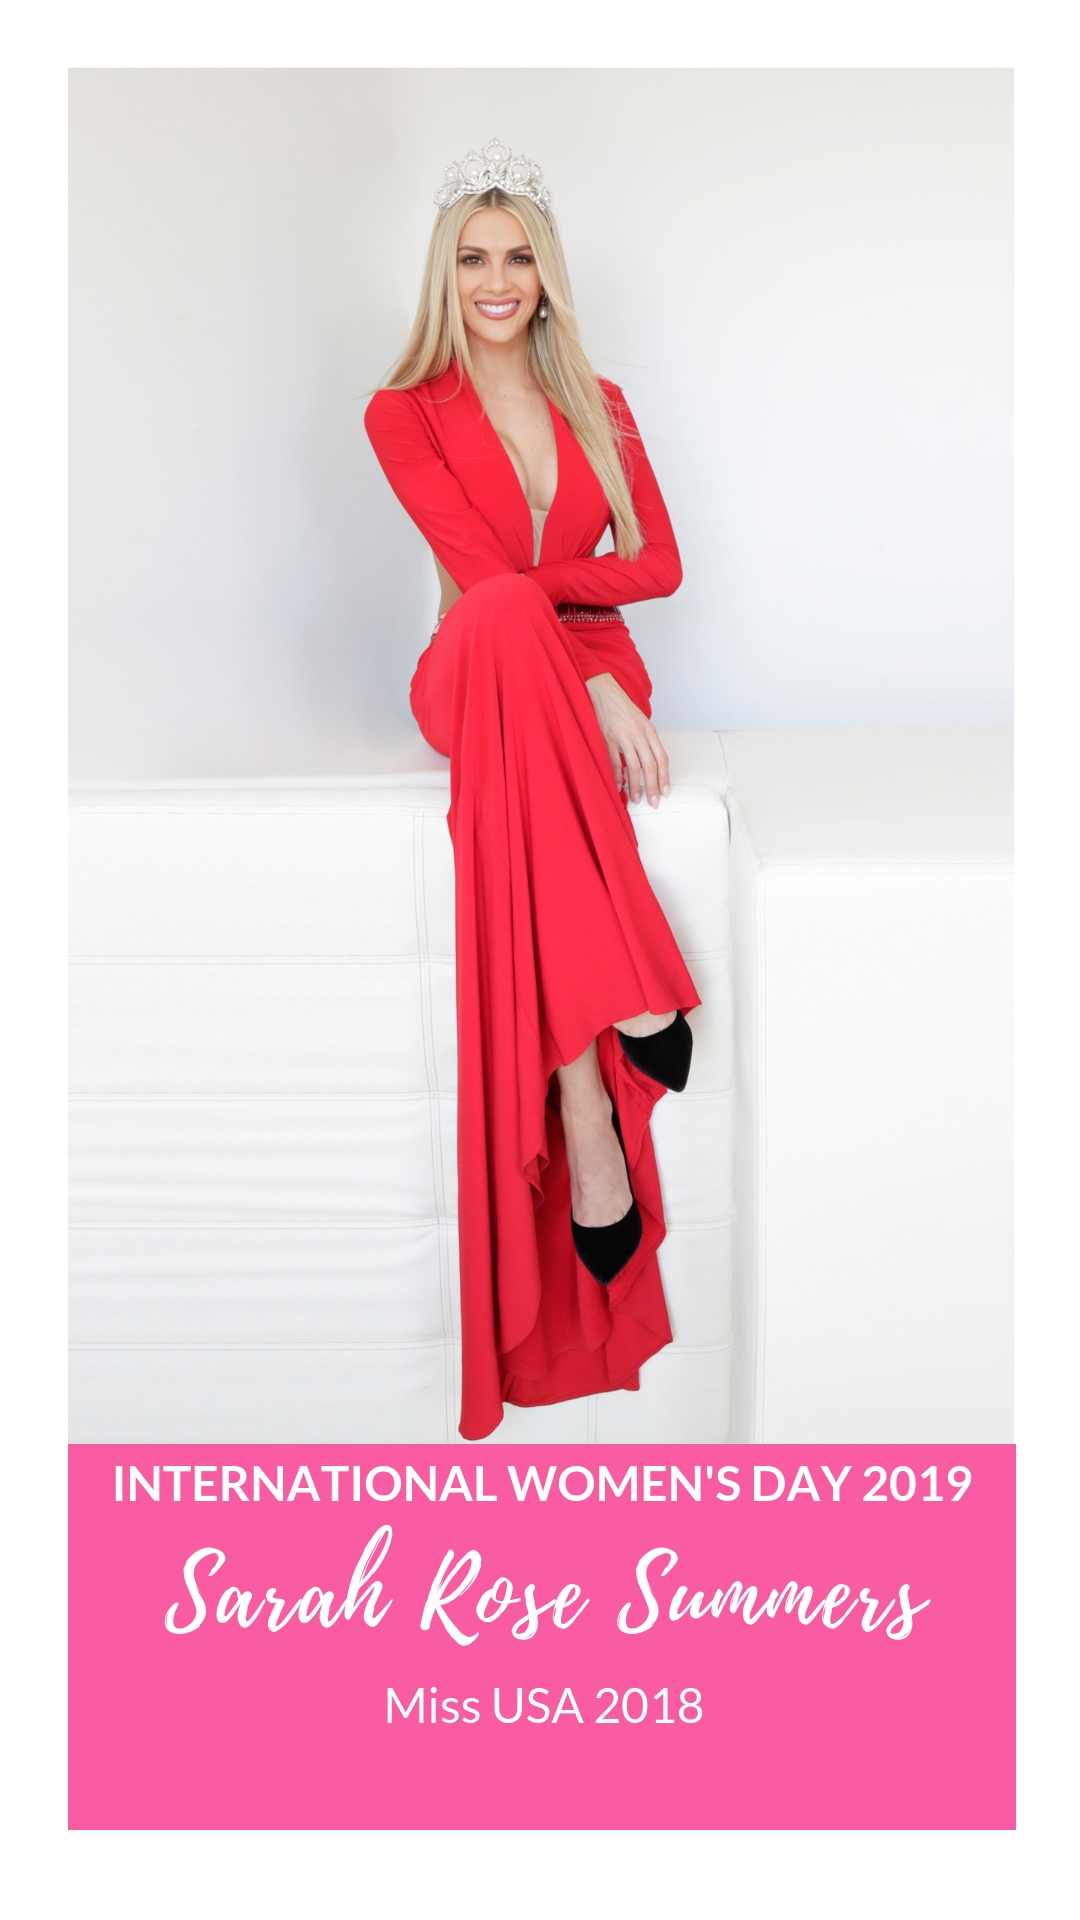 International Women's Day - Sarah Rose Summers